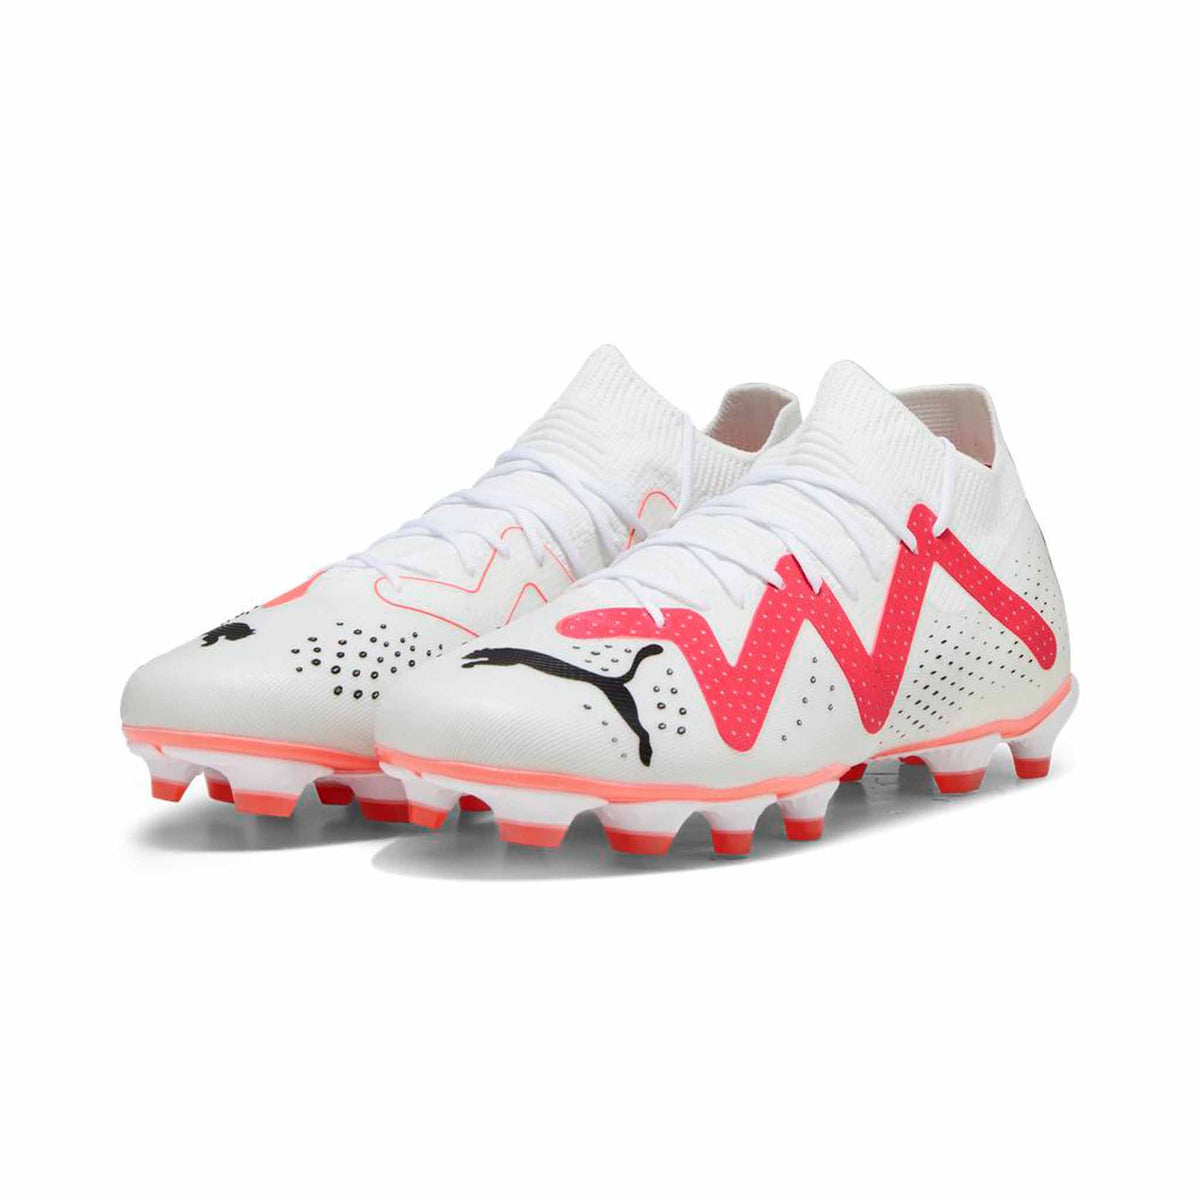 Puma Future Match FG/AG chaussures de soccer a crampons - Puma White / Fire Orchid